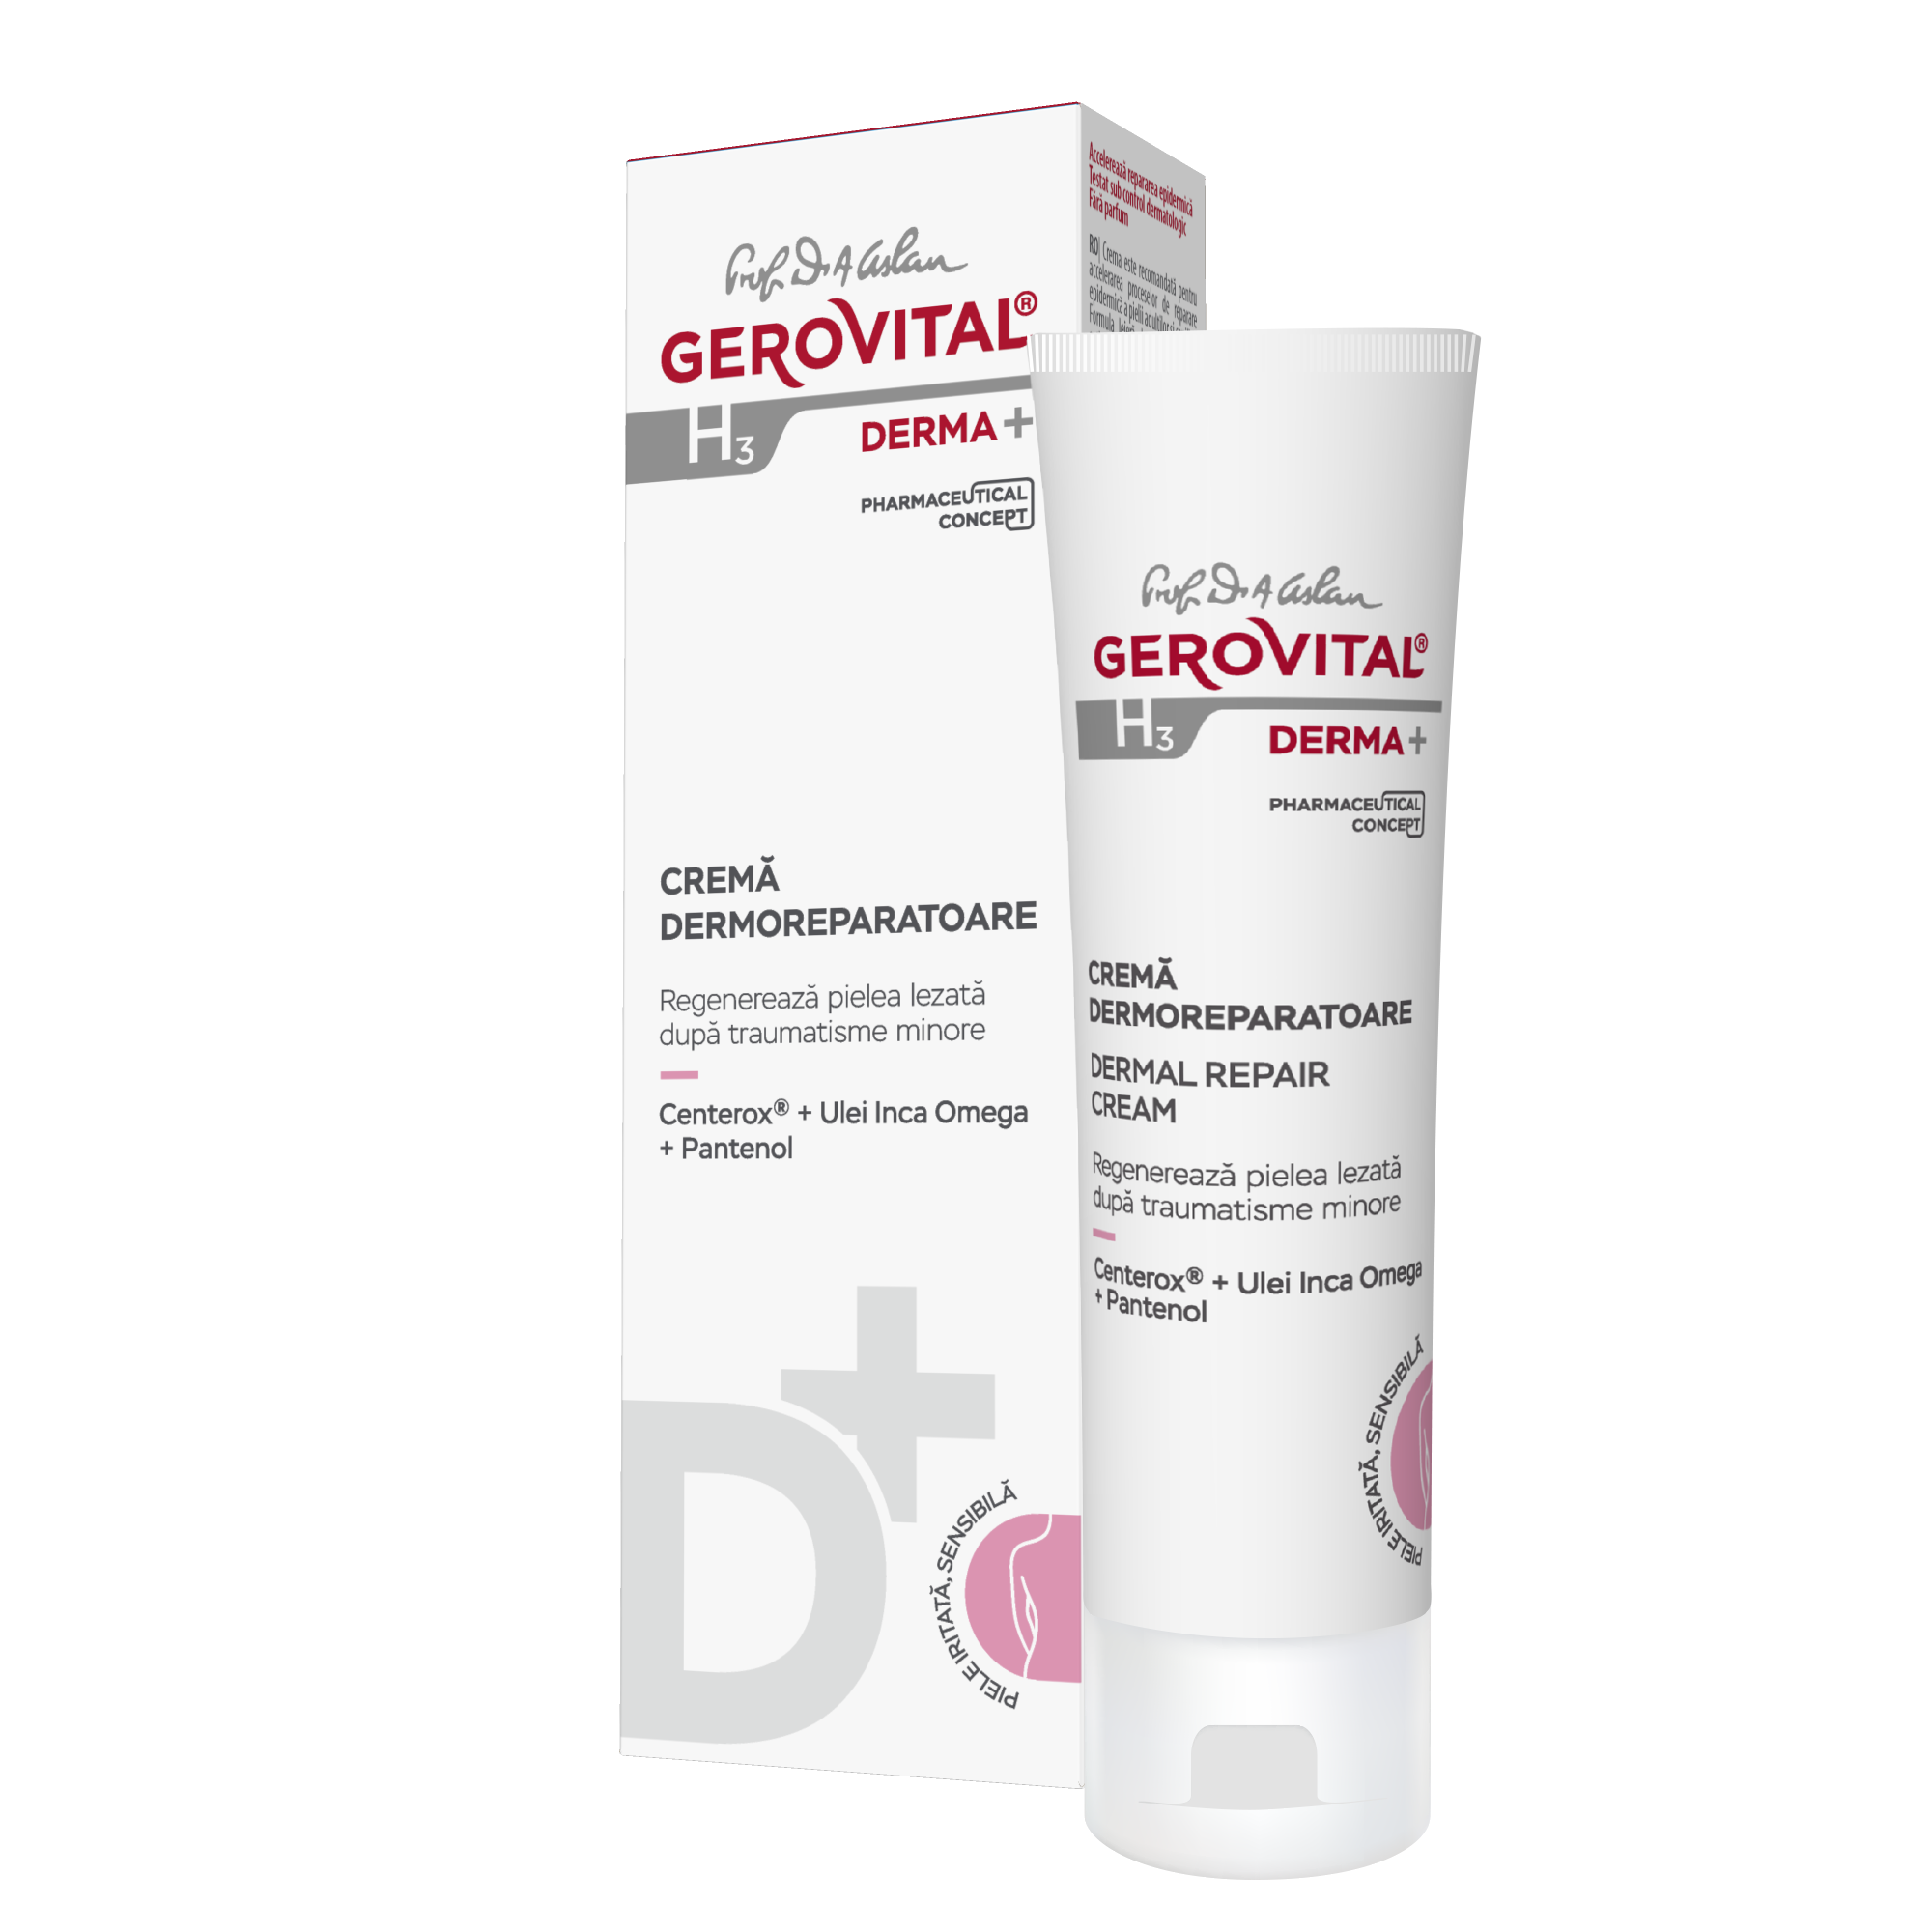 Crema dermoreparatoare Gerovital H3 Derma+, 5 0ml, Gerovital